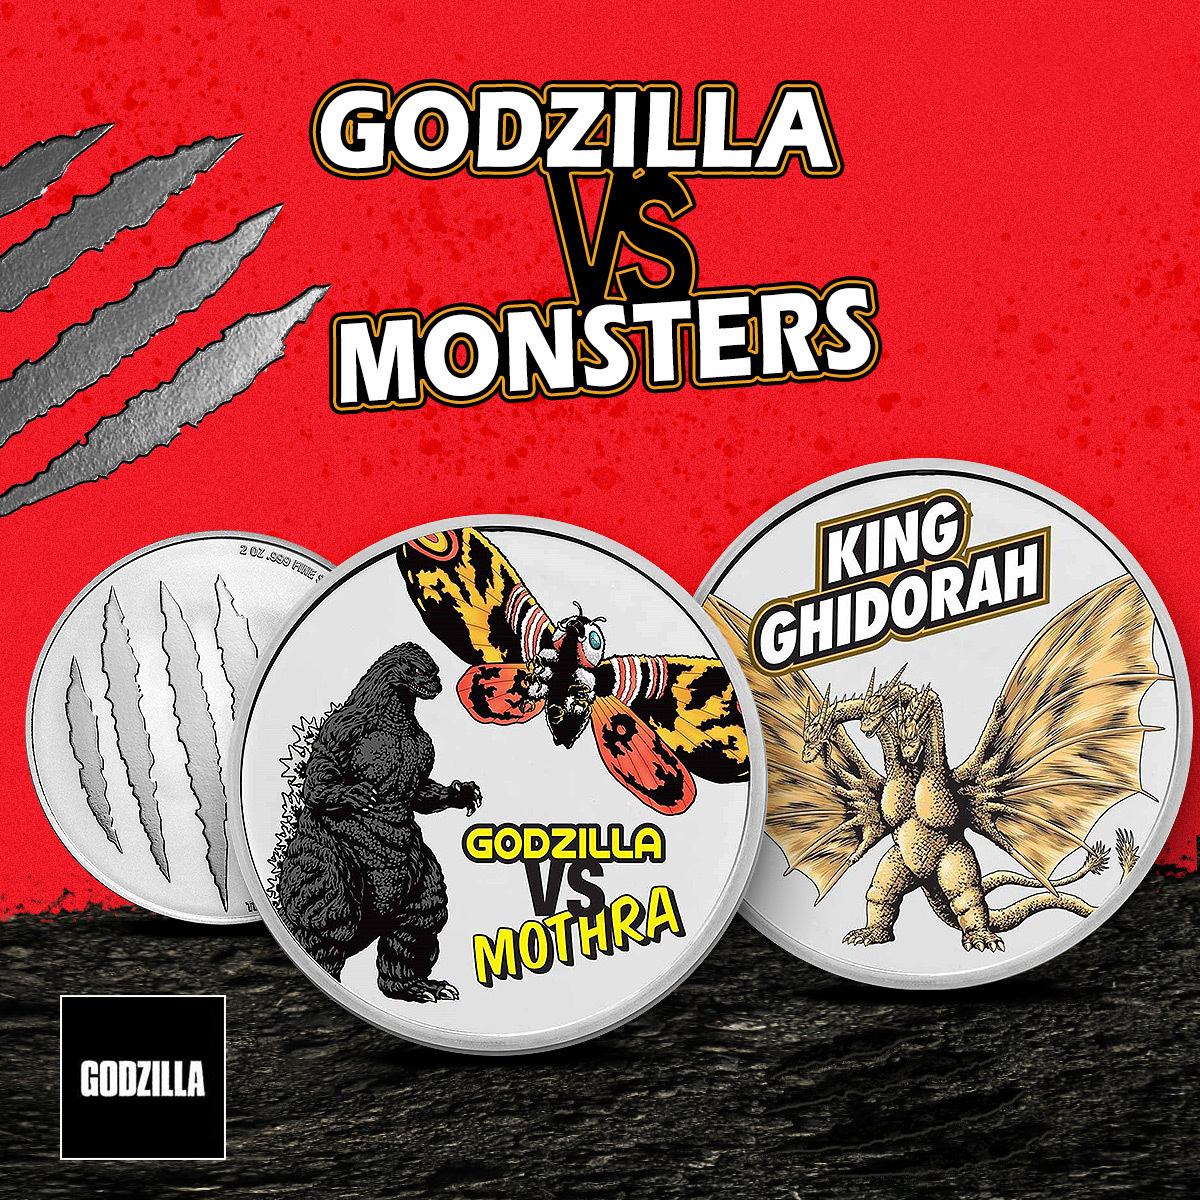 Godzilla vs Monsters